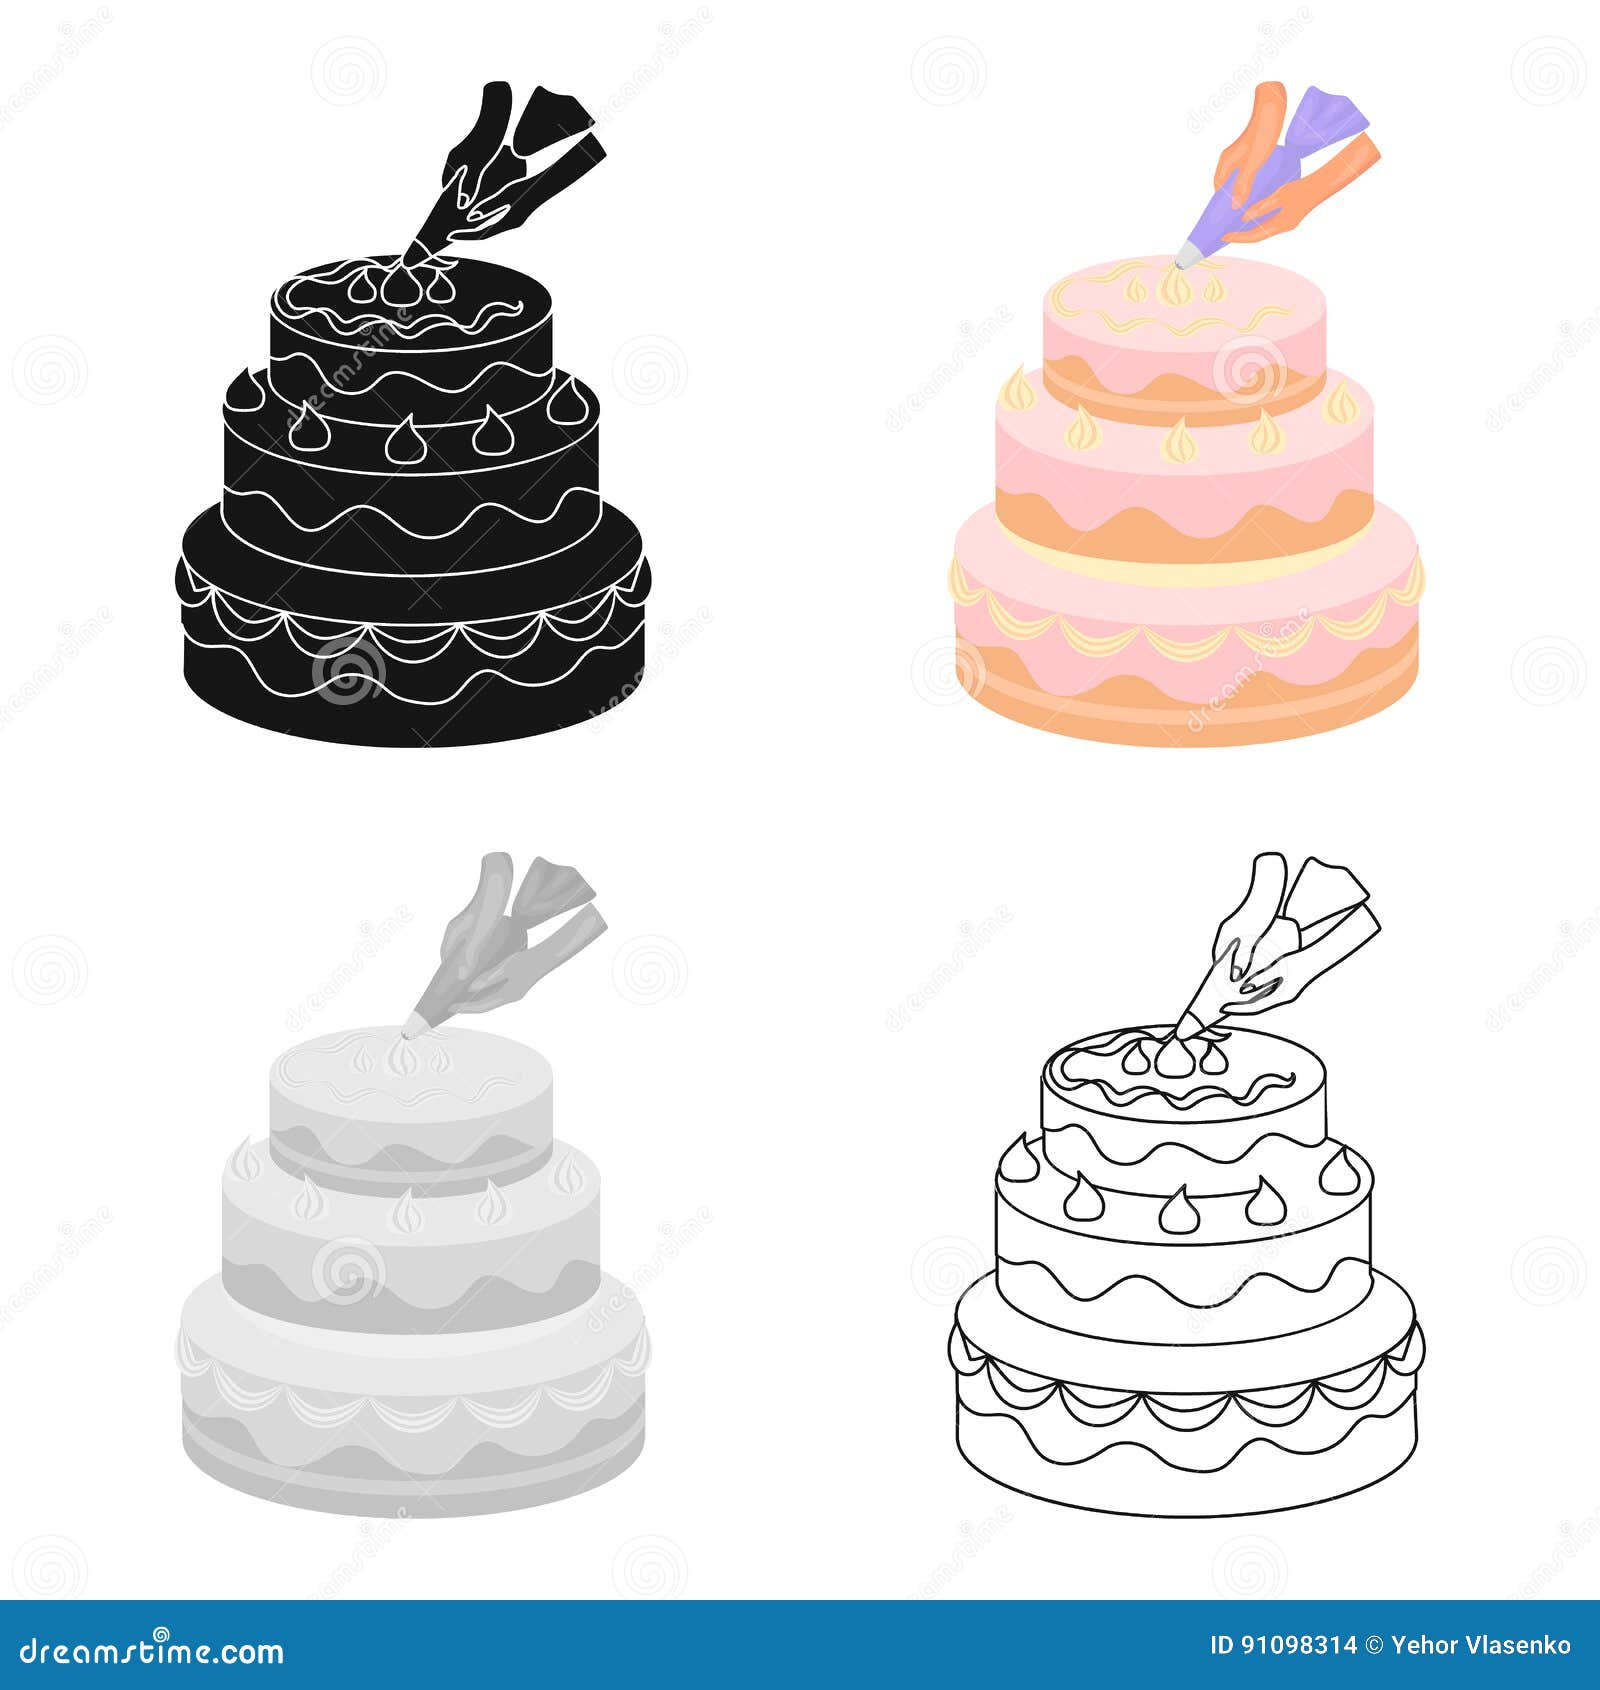 Modelo de bolo de aniversário colorido isolado dos desenhos animados plana